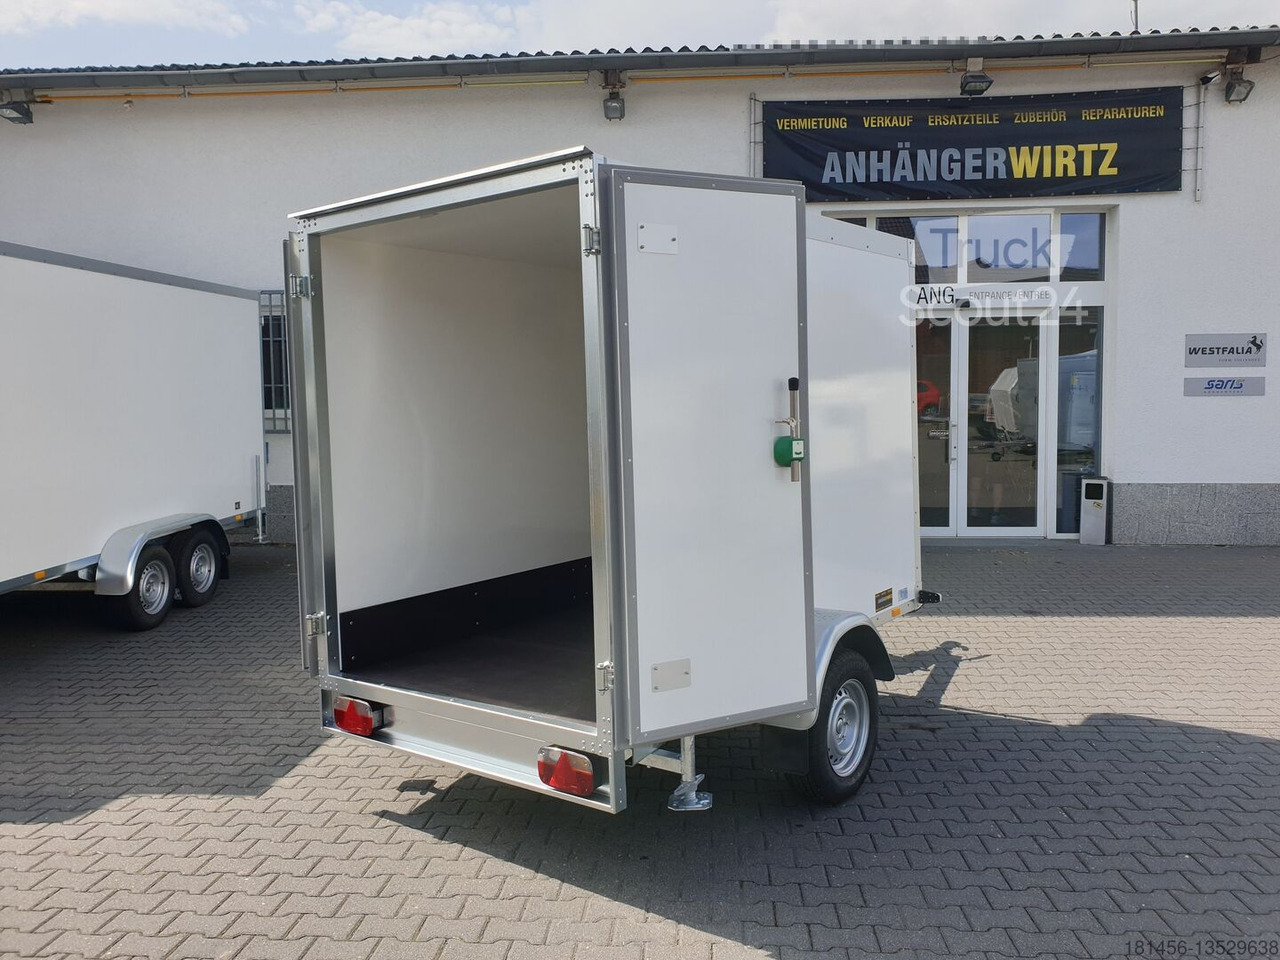 Ny Kjølehenger mobile Kühlzelle 60mm isoliert mit Standstützen 230Volt Govi Kühlung direkt verfügbar Neu: bilde 5